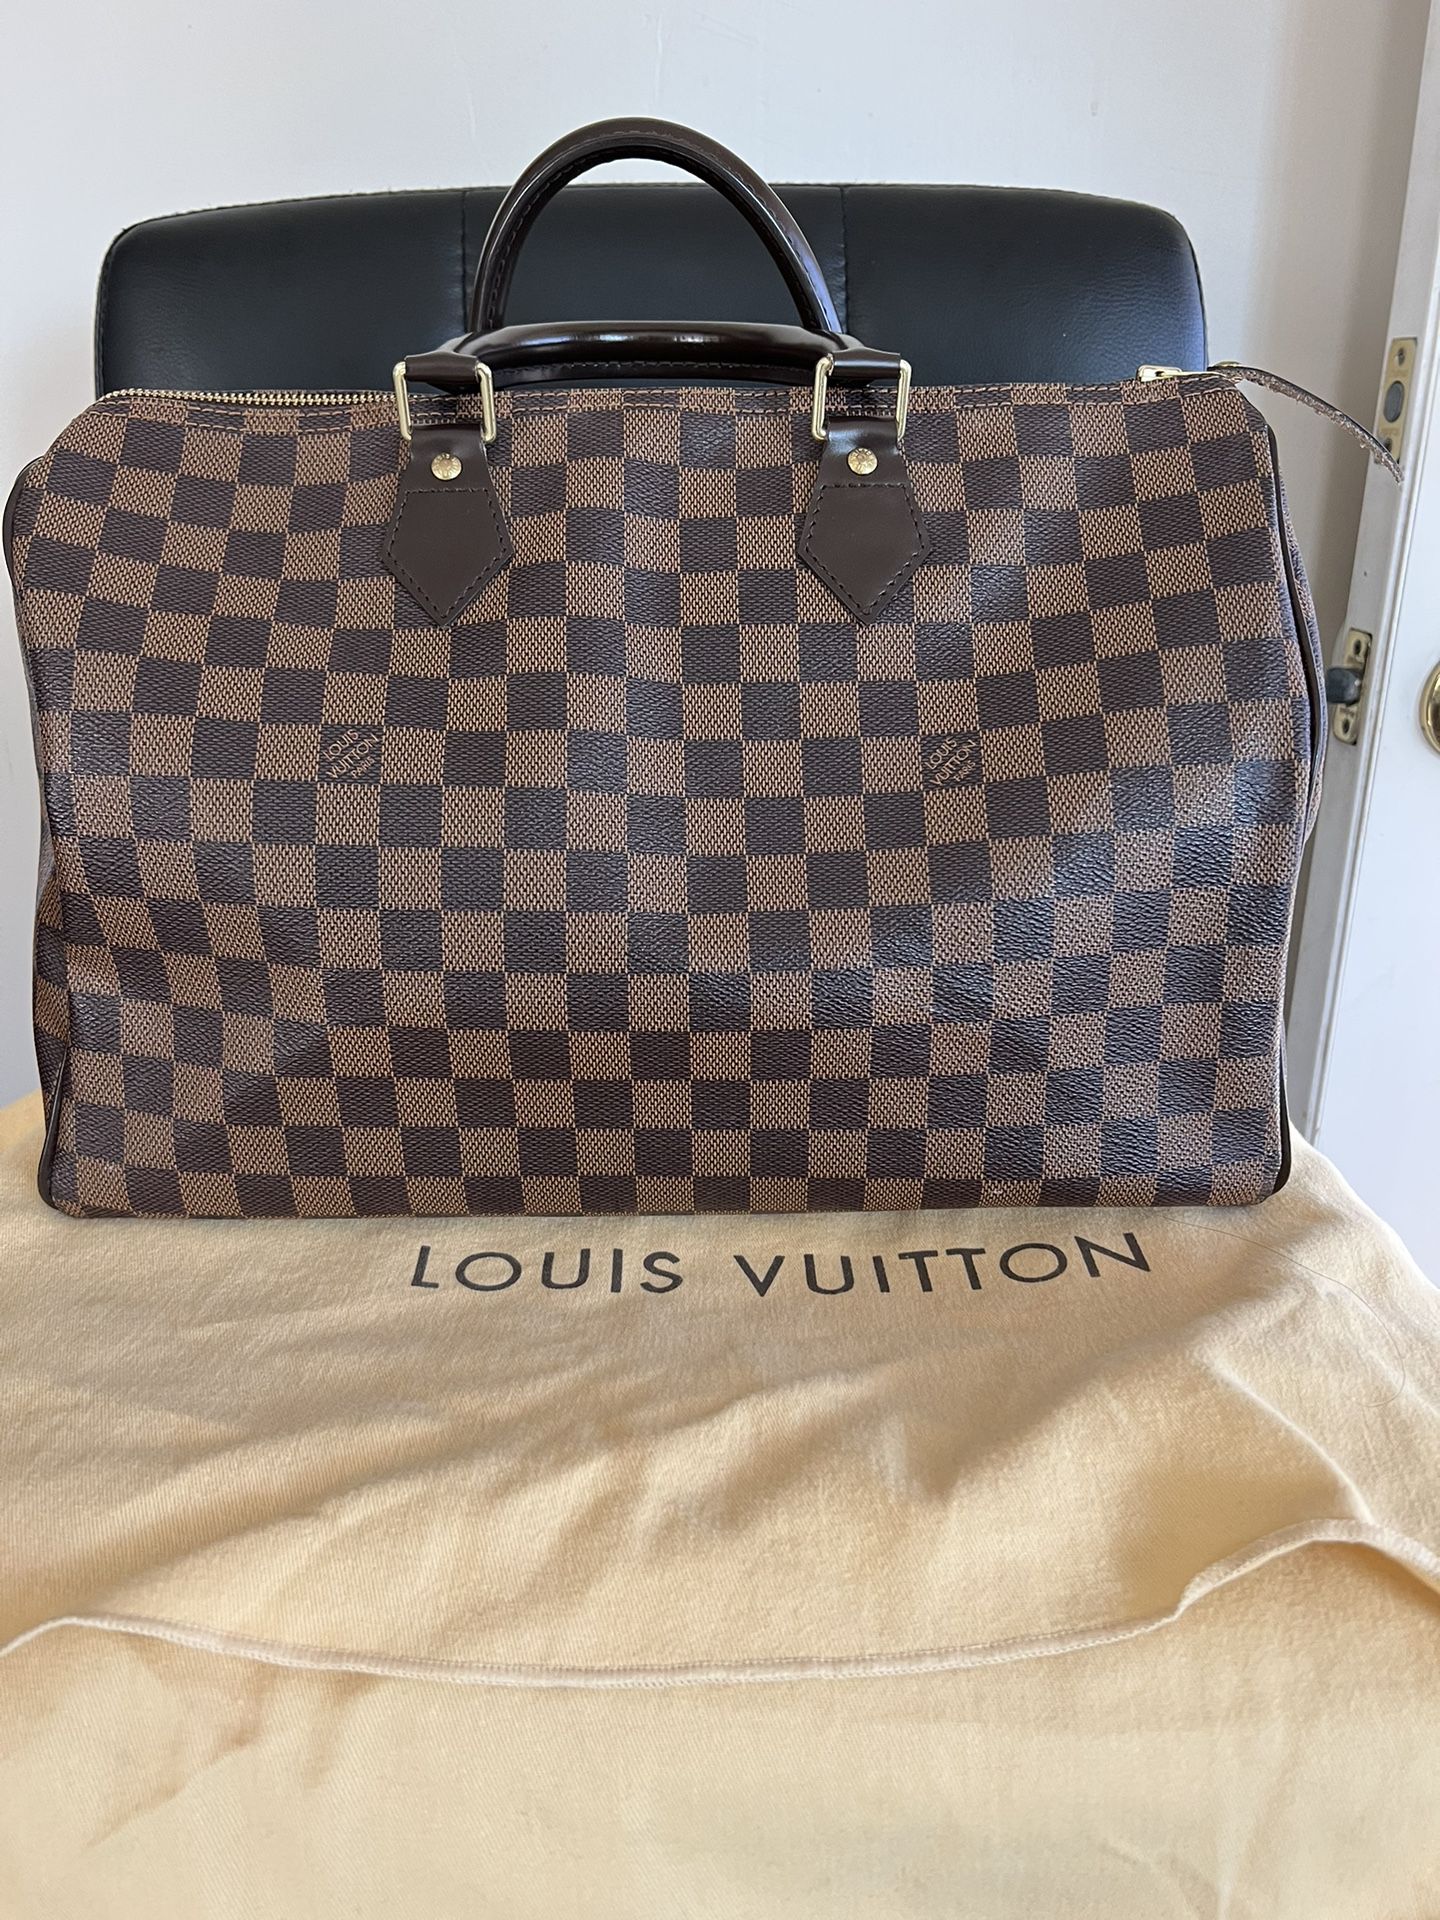 Authentic Louis Vuitton Speedy 35 Bag W/ S custom Scarf for Sale in Alpine,  CA - OfferUp